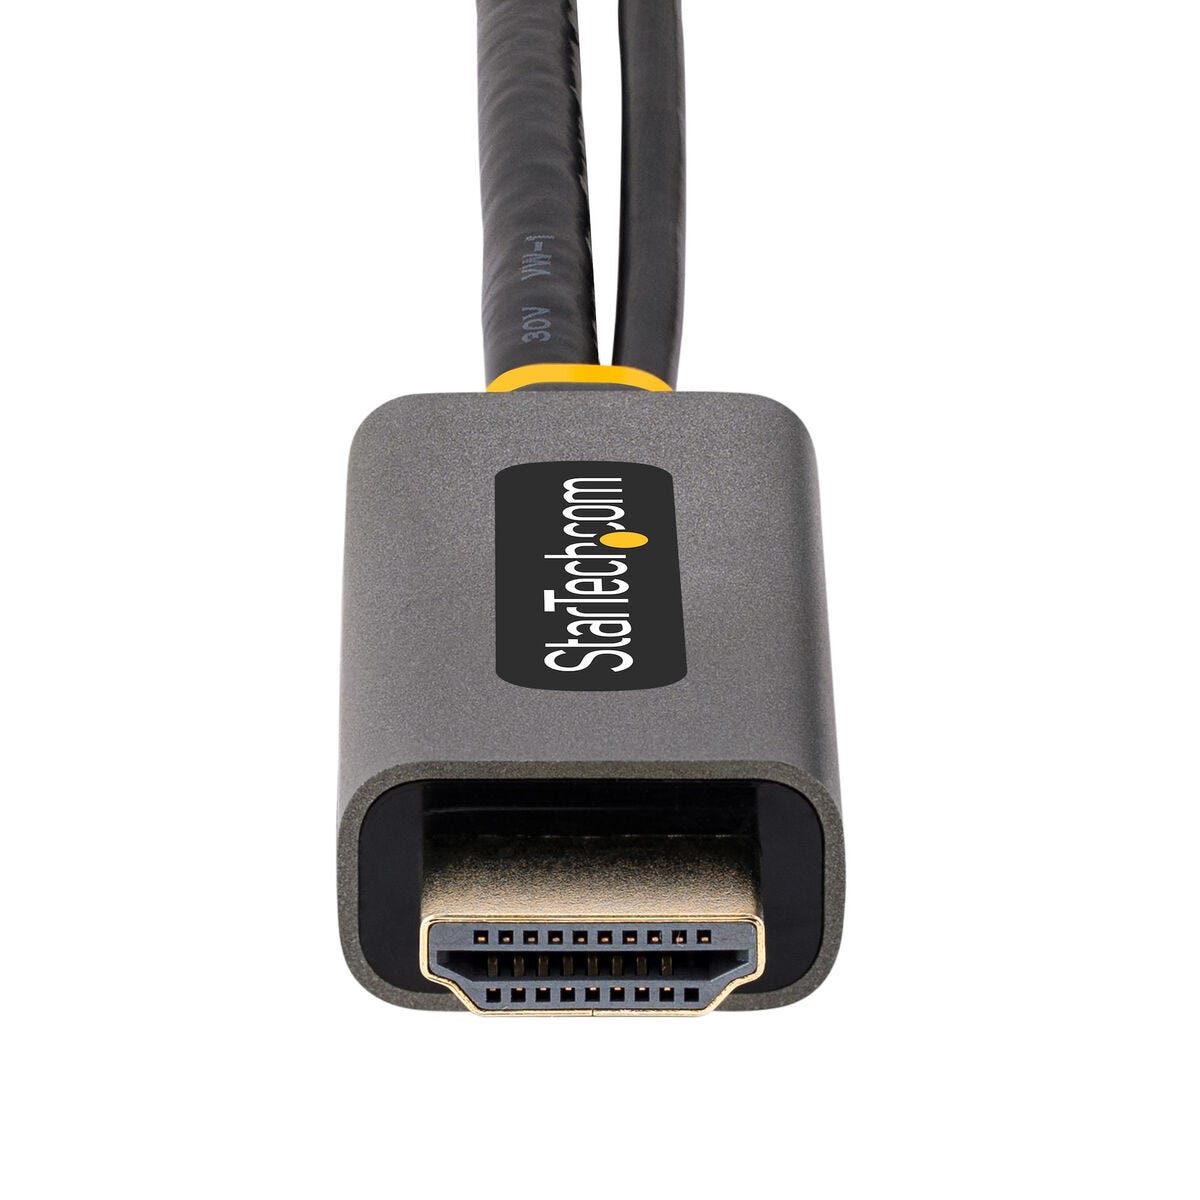 ADAPT.HDMIFDPM-02 - Adaptateur HDMI femelle / DisplayPort male de 0.2m -  Fibre CR1C1, Câbles vidéo, Cordons informatiques